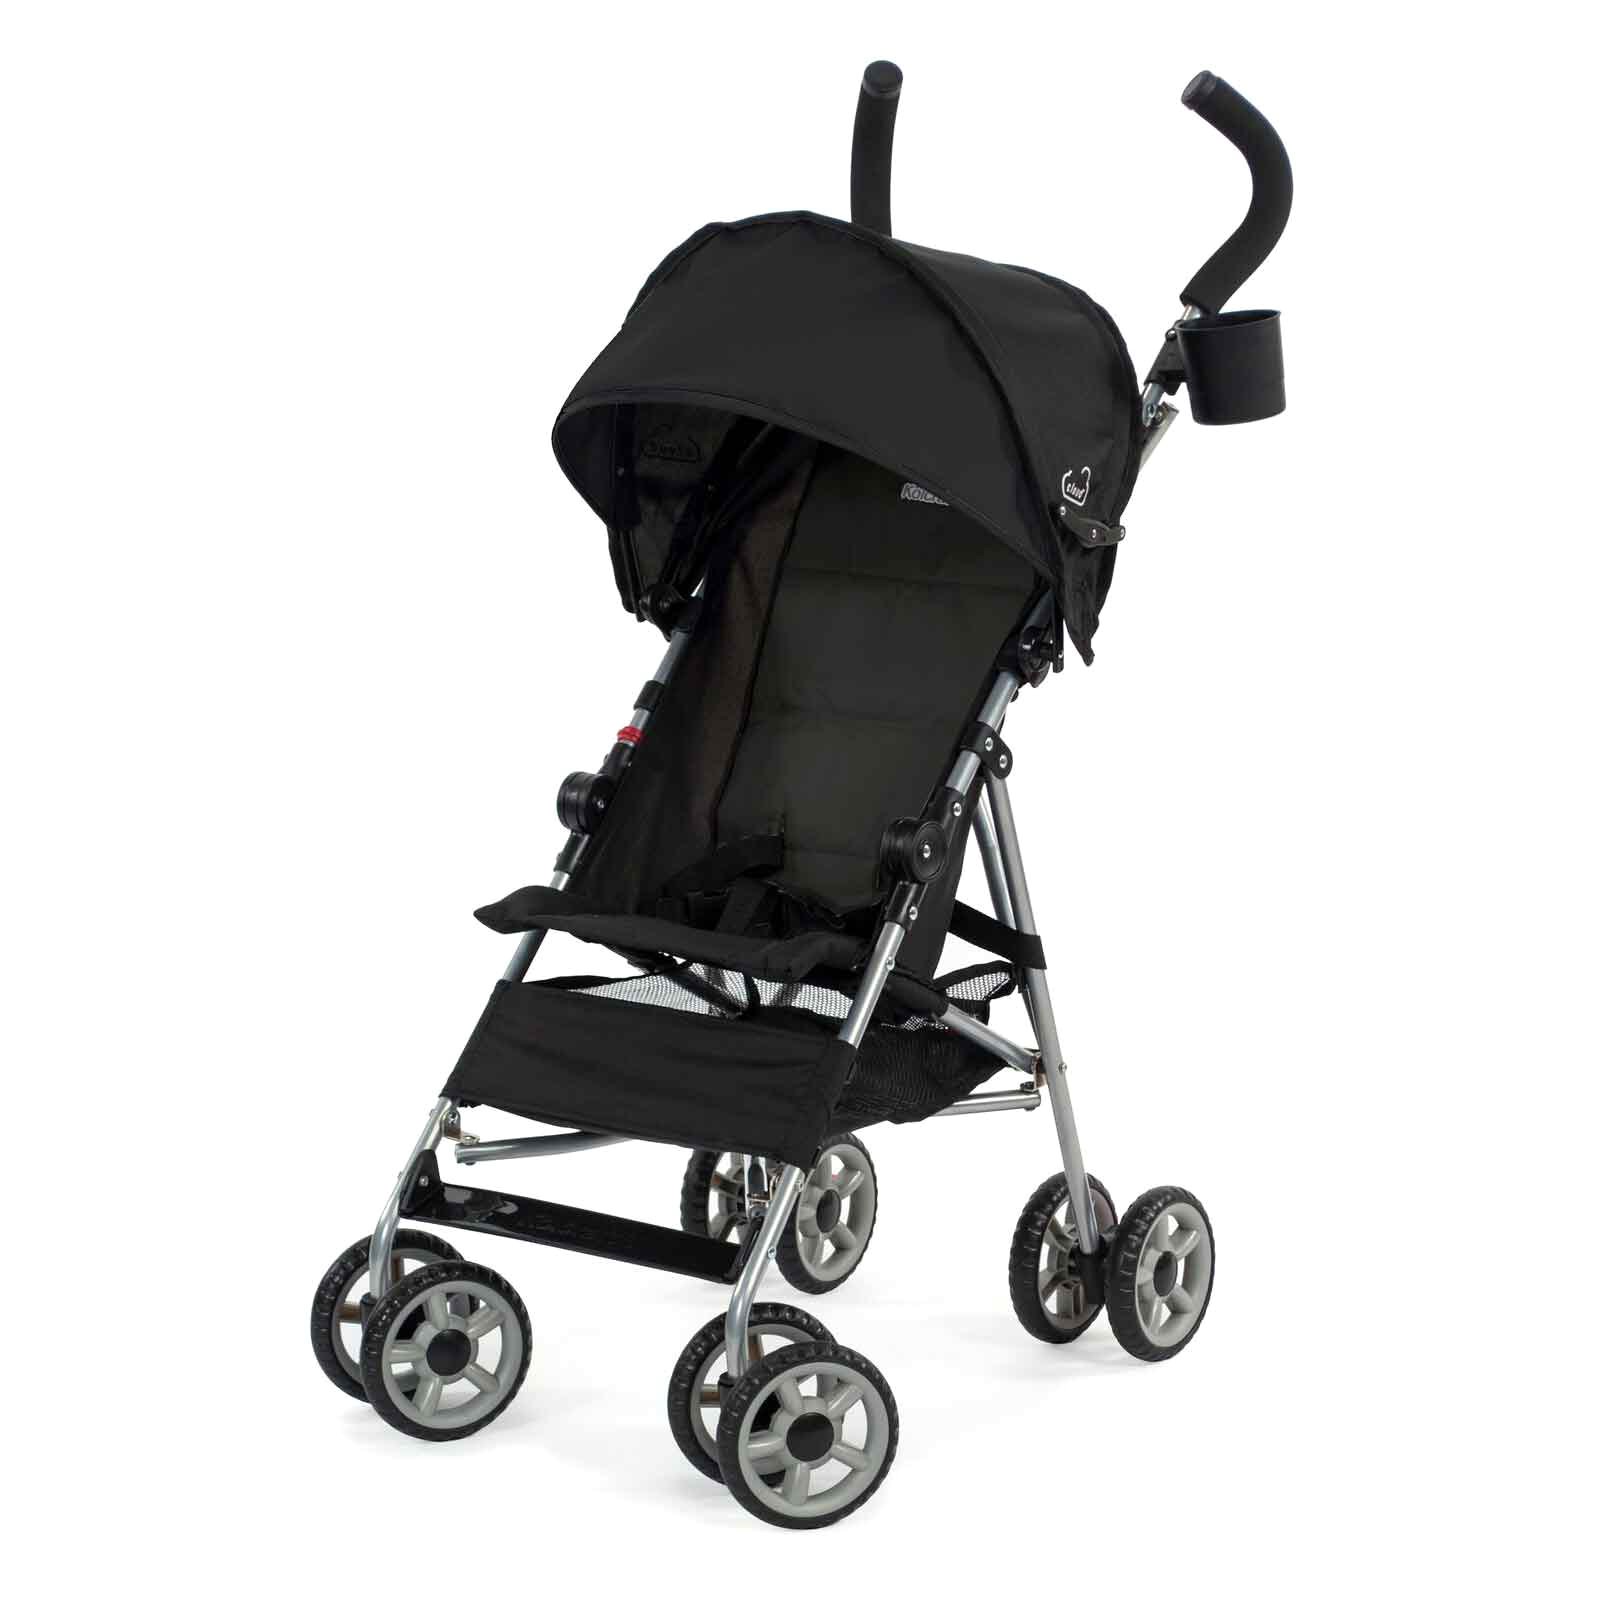 sears baby strollers